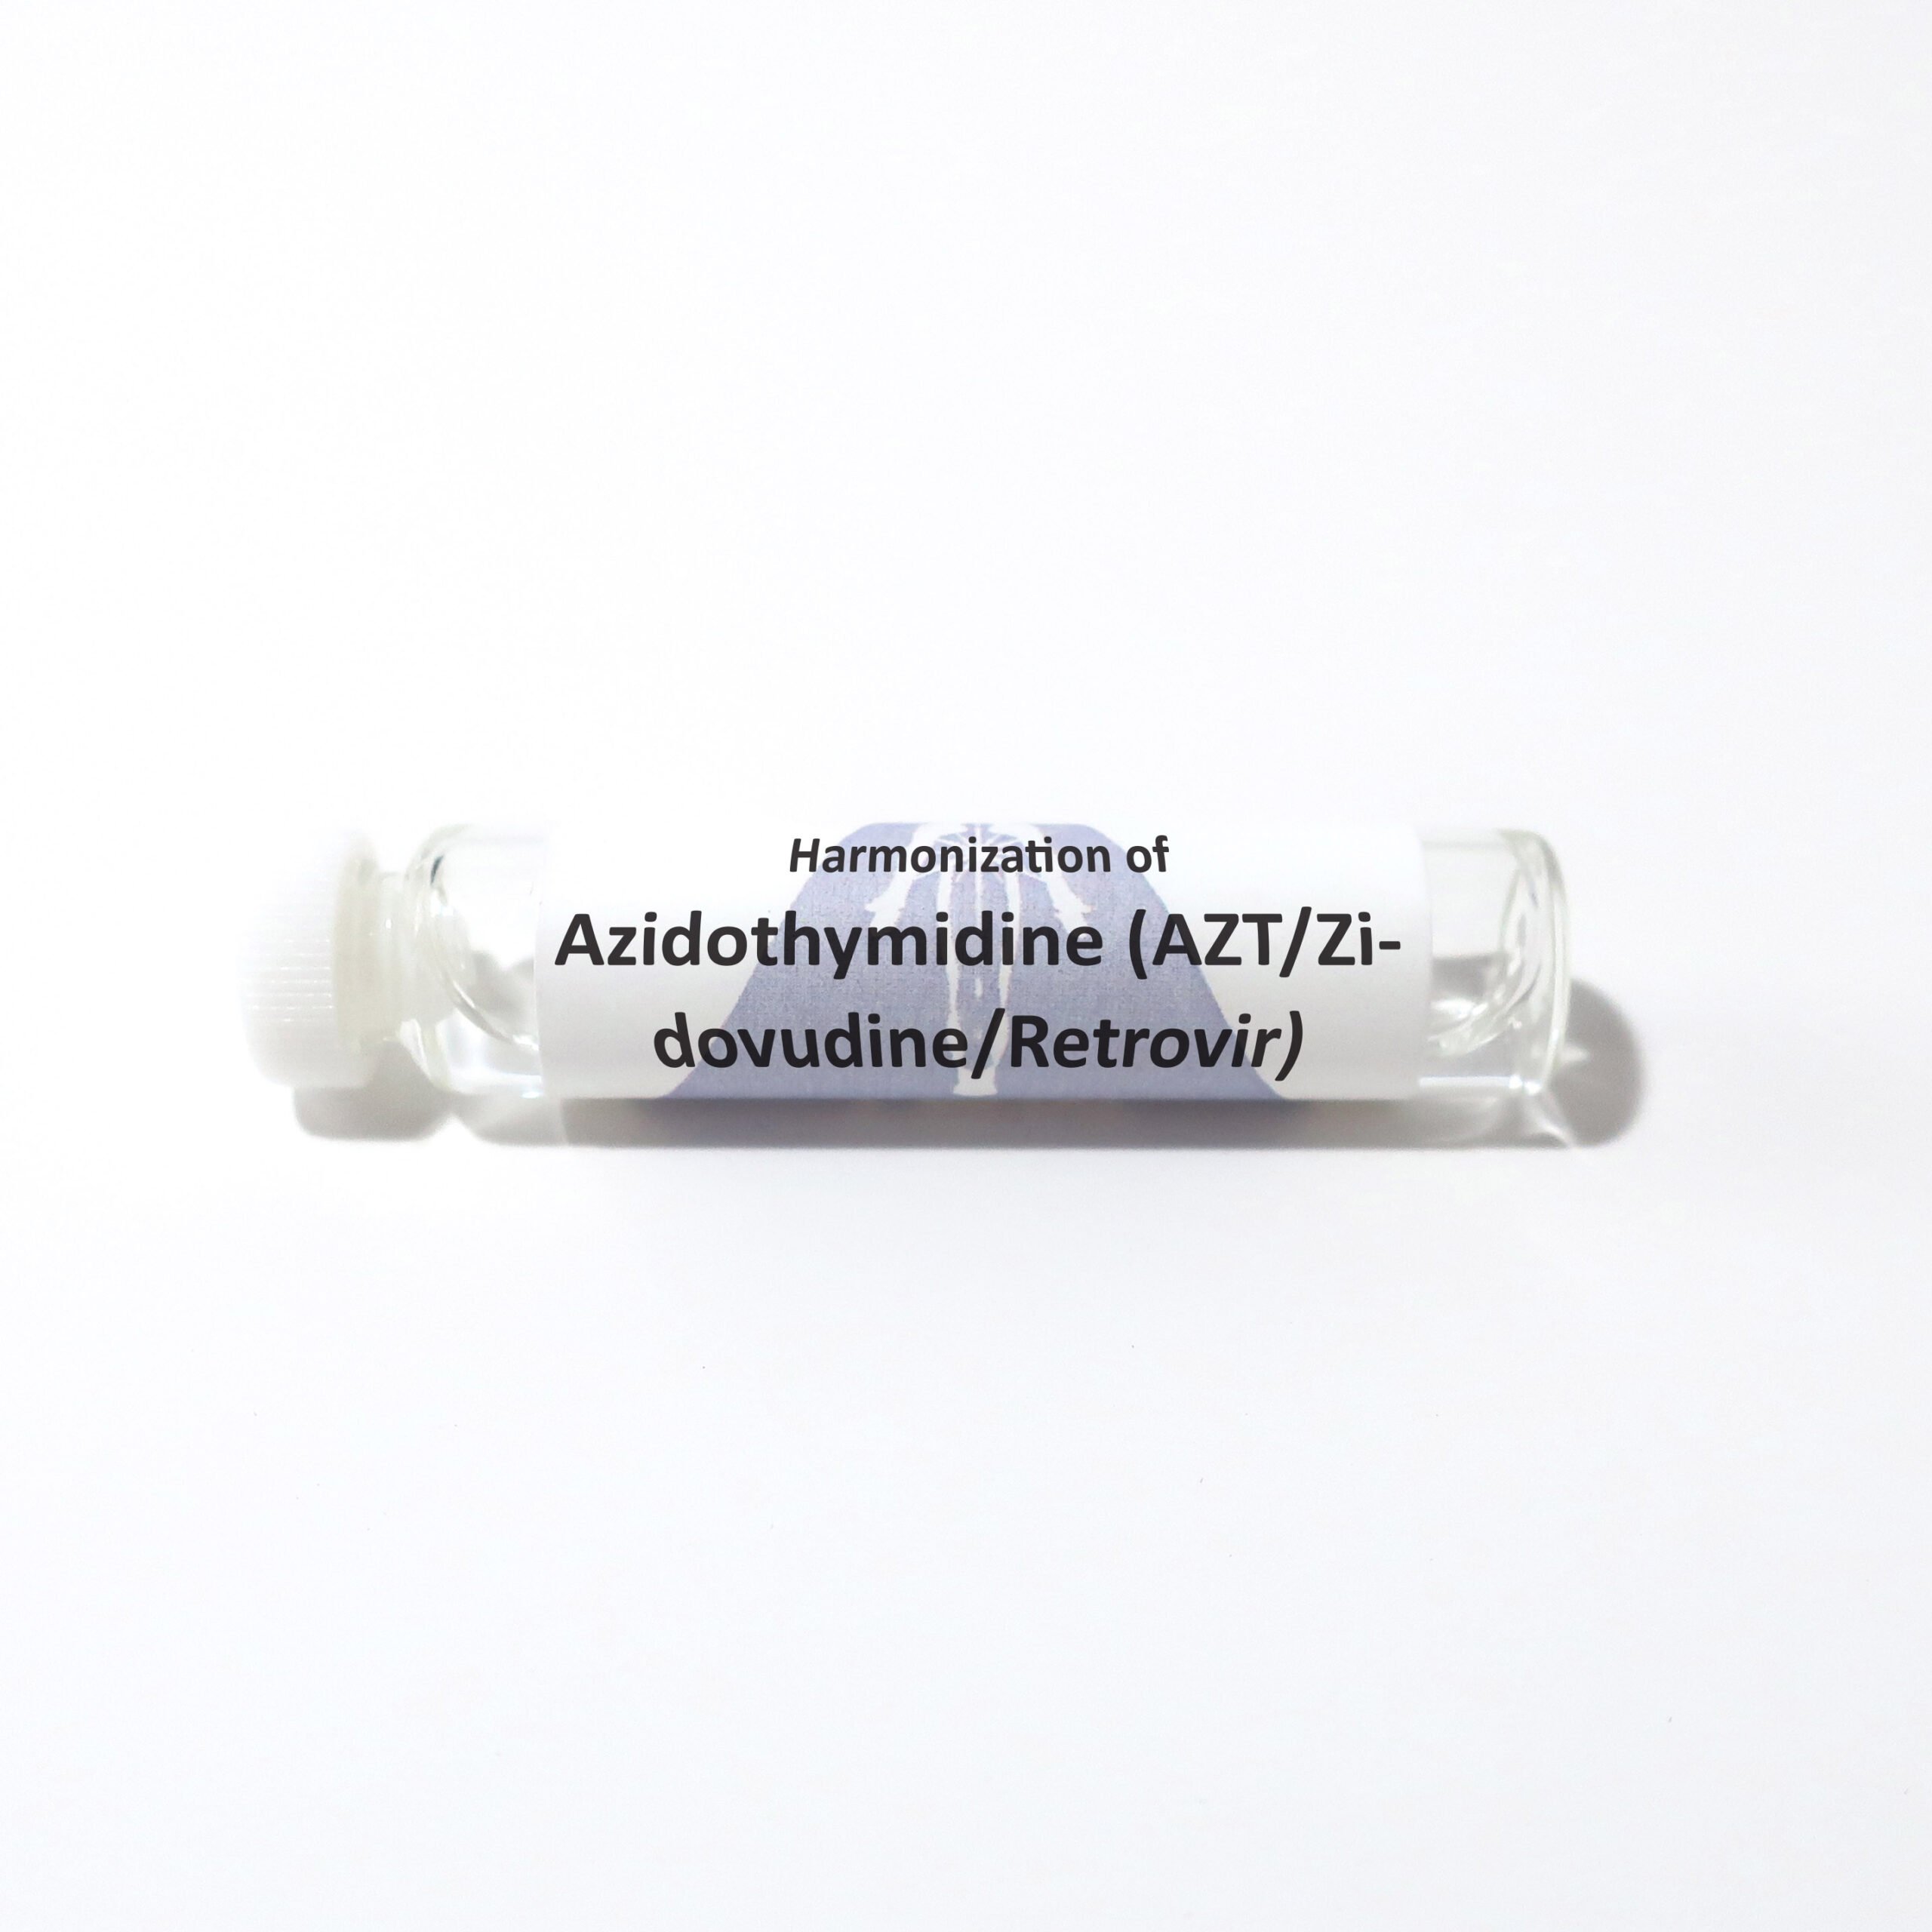 Azidothymidine (AZT/Zidovudine/Retrovir)